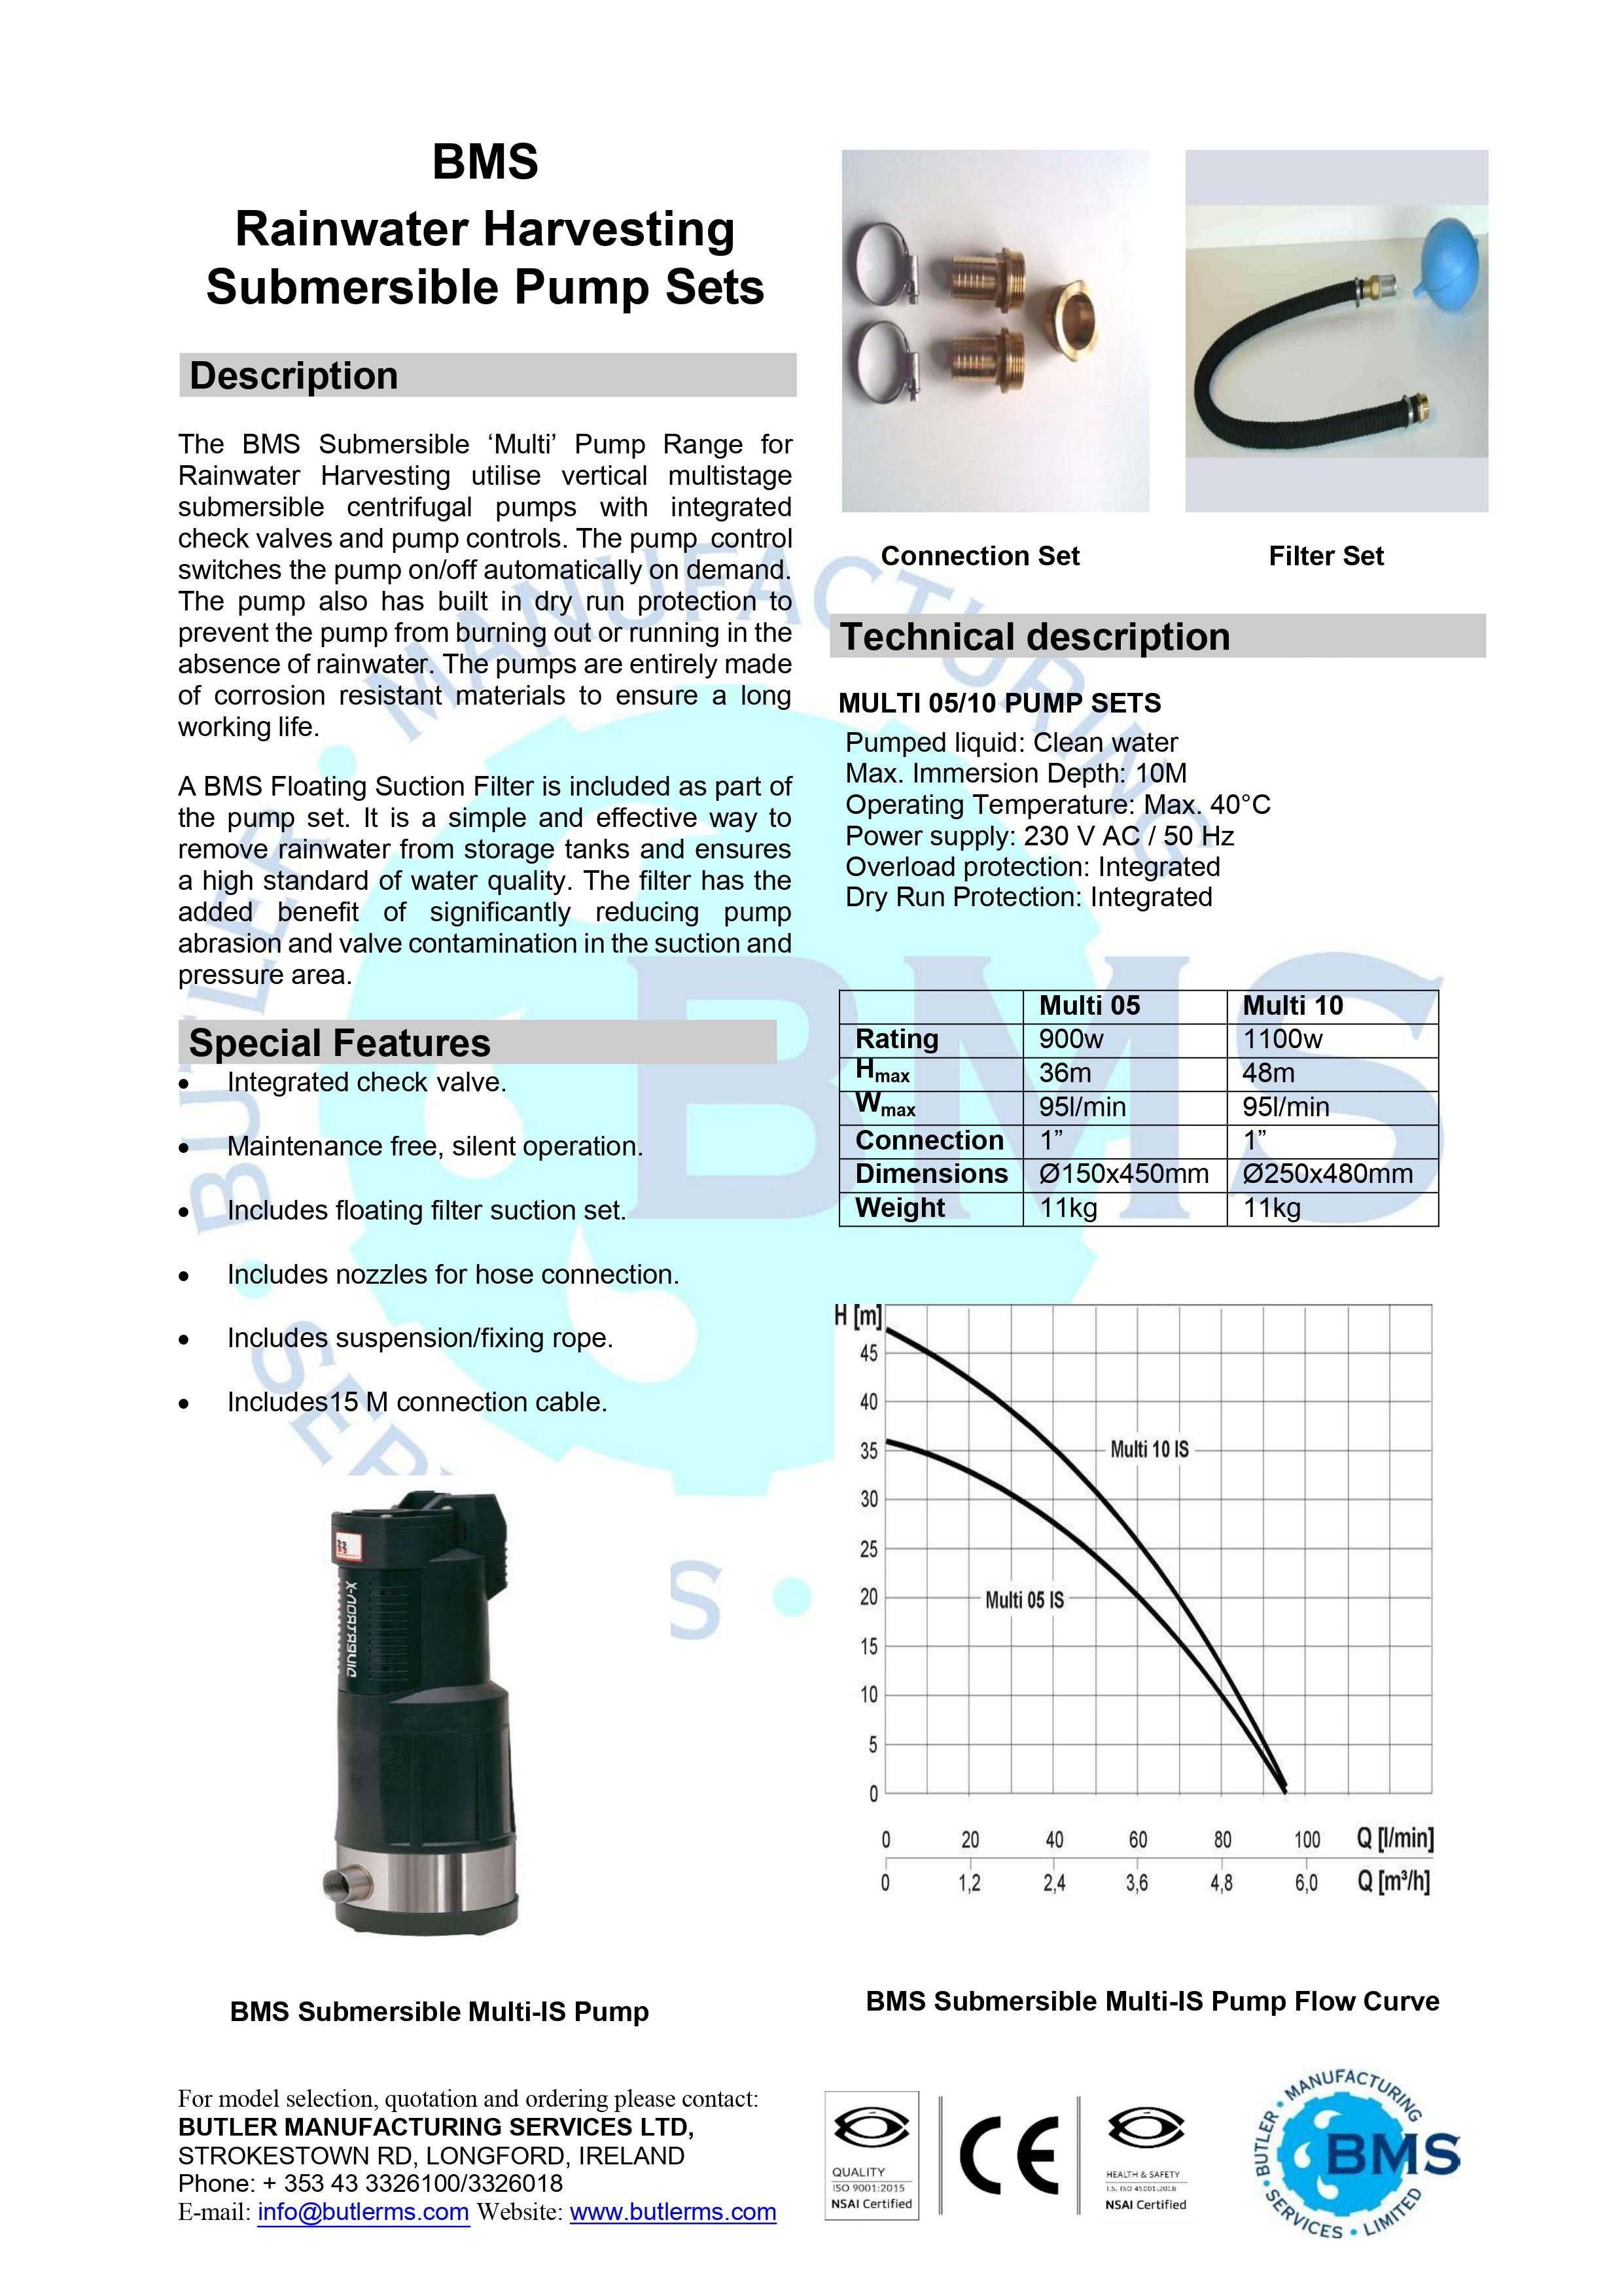 BMS Rainwater Submersible Pump Sets Brochure_I1.jpg